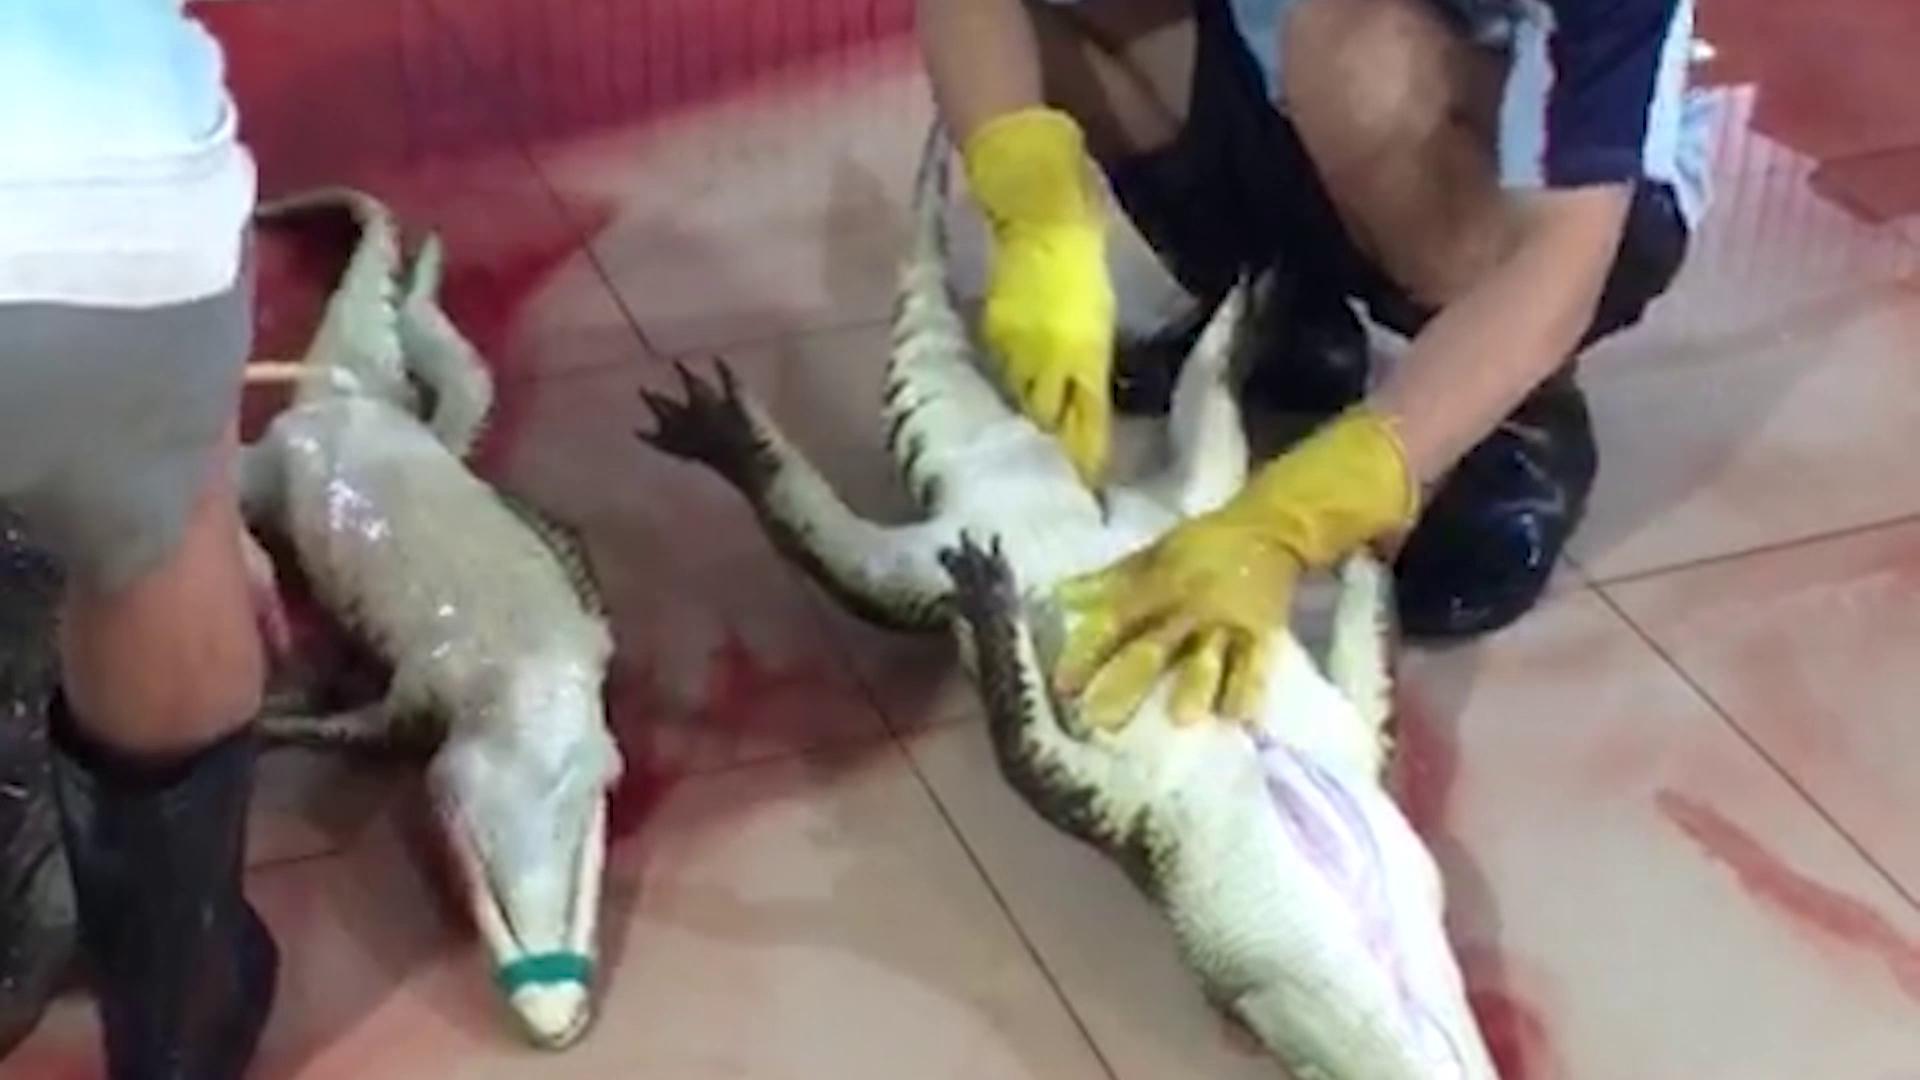 PETA on X: Retailer @LouisVuitton's suppliers keep crocodiles in